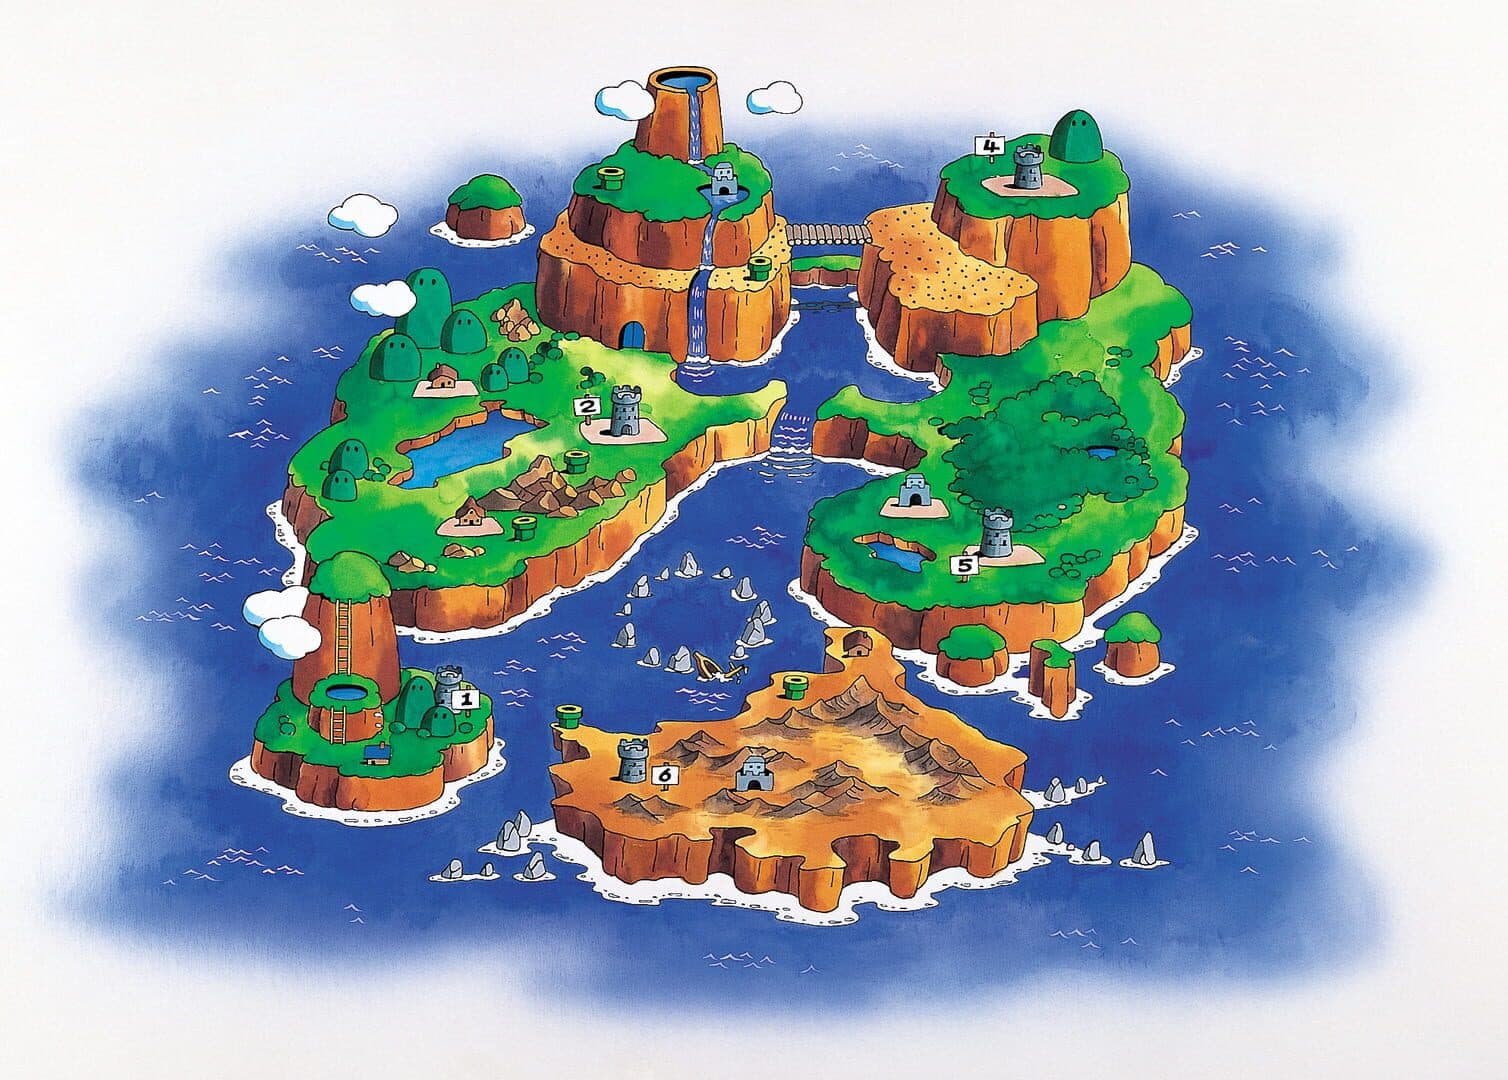 Super Mario World Image